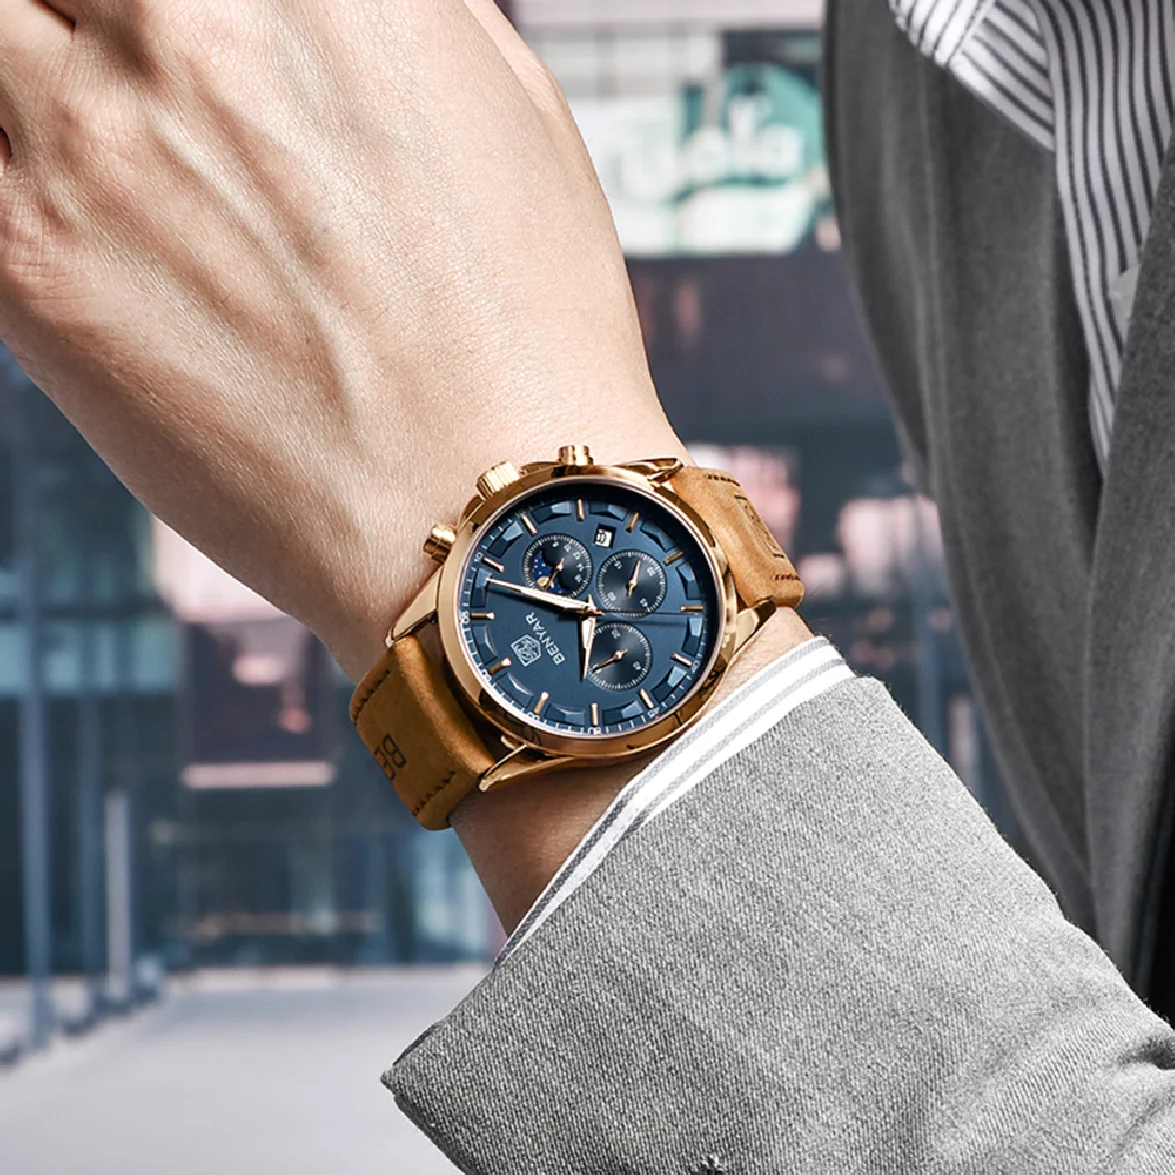 

BNEYAR Fashion Men Quartz Wristwatches Top Brand Sports Chronograph Watch Leather Waterproof Military Watch for Men reloj hombre